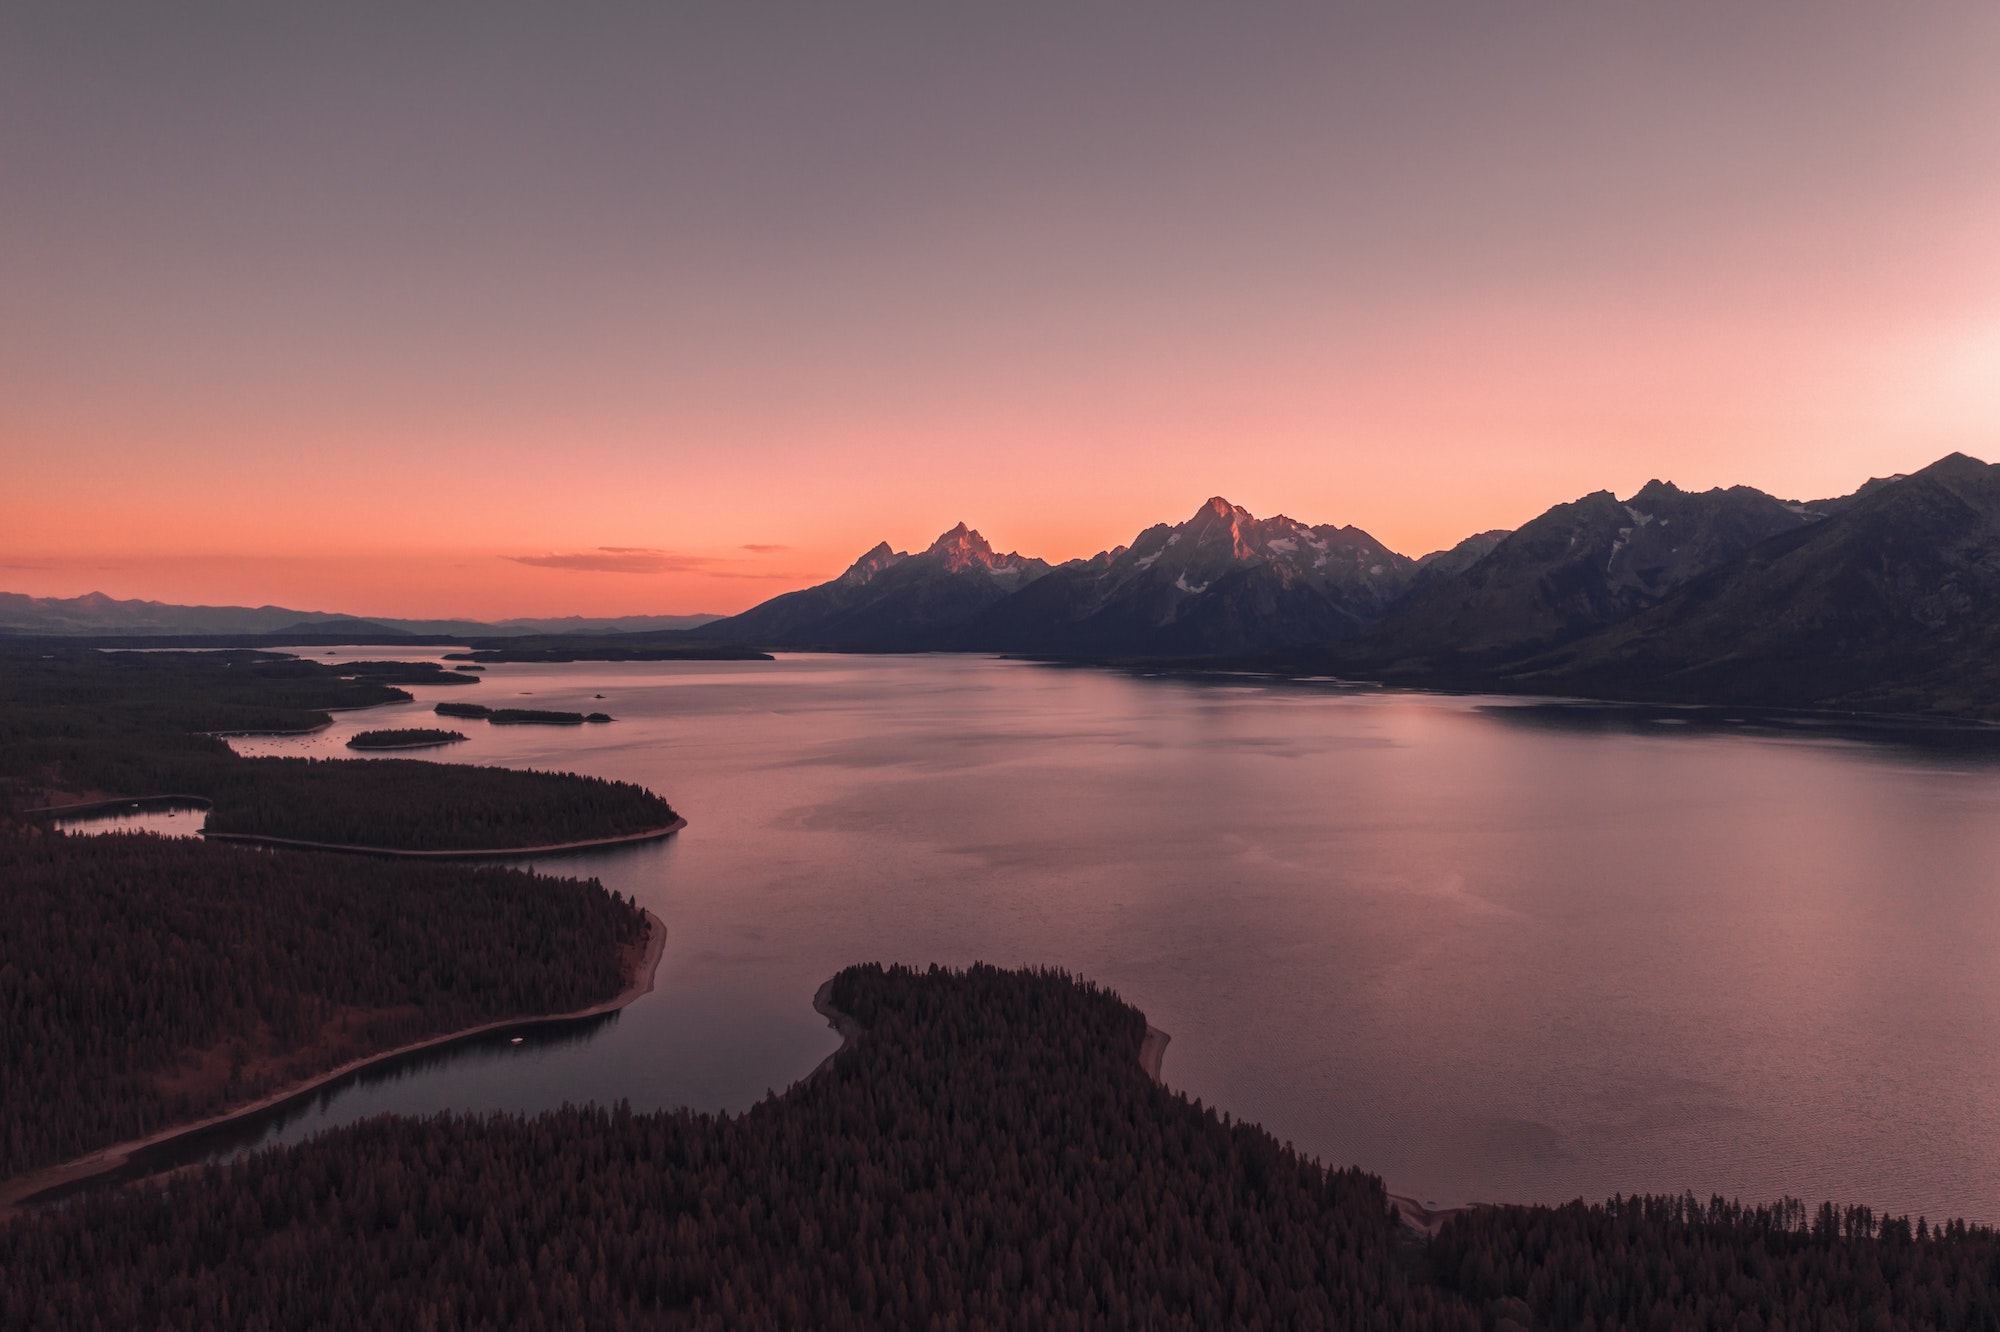 Jackson Lake and the Tetons at sunset.